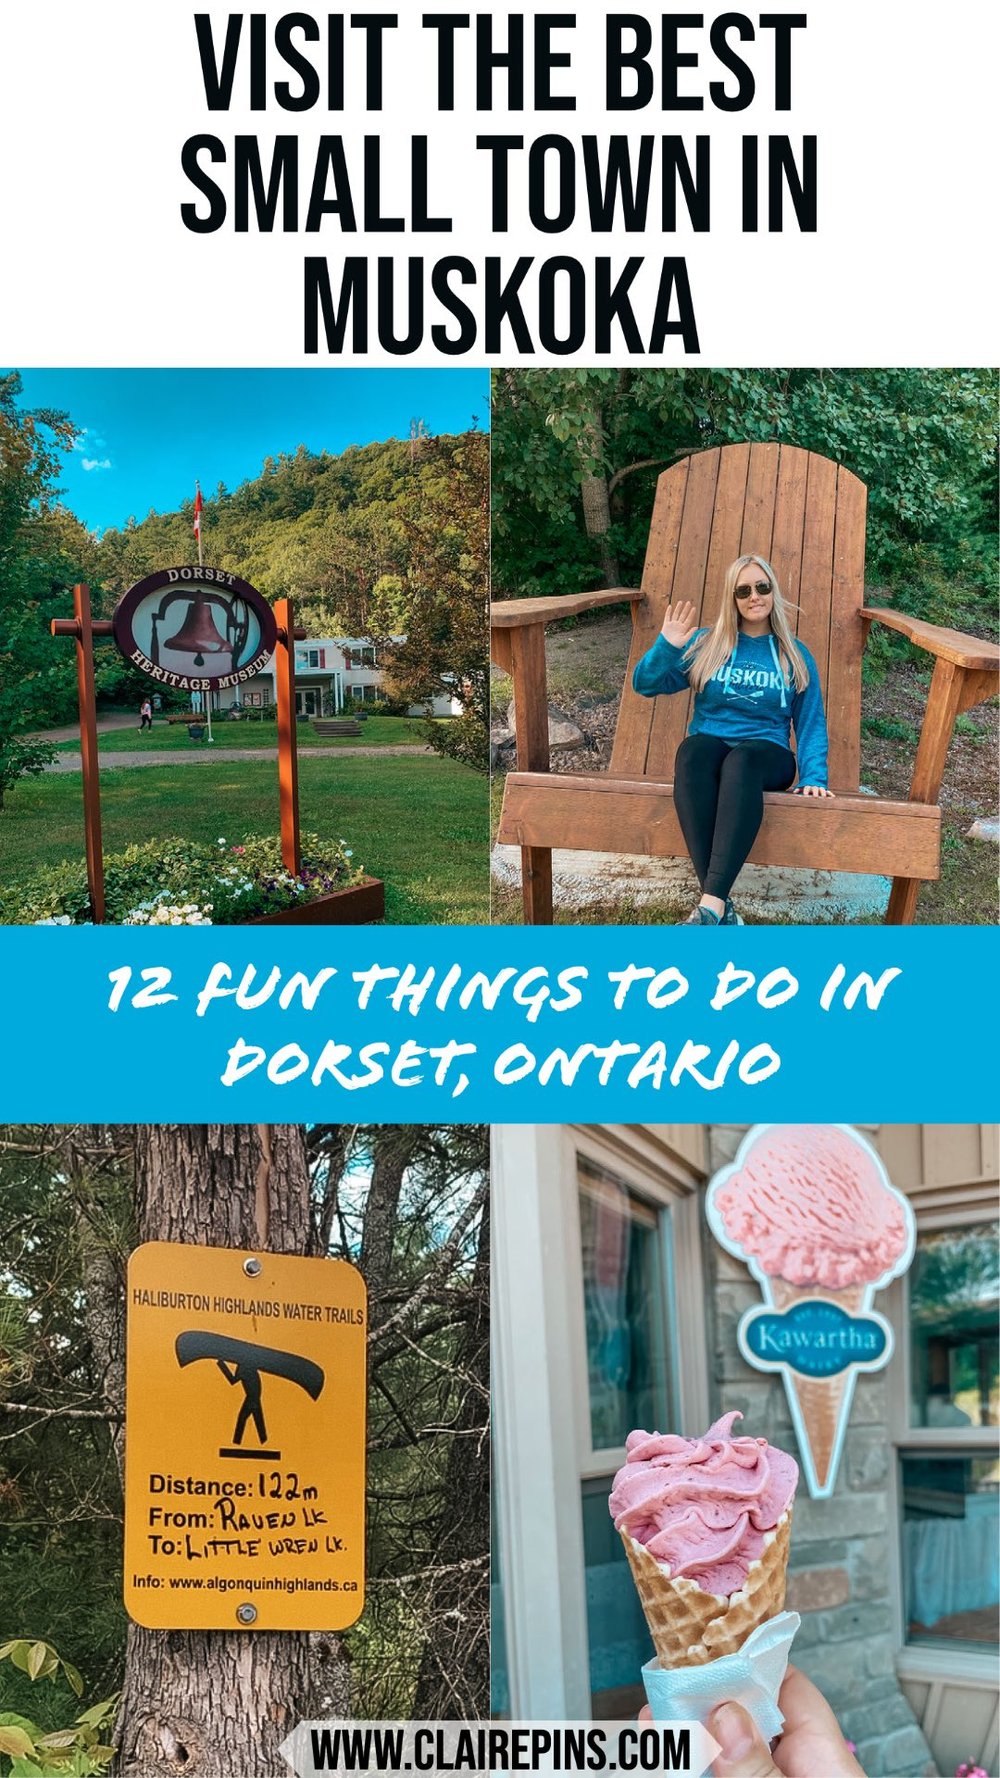 15 fun things to do in Dorset Ontario in Muskoka.jpg